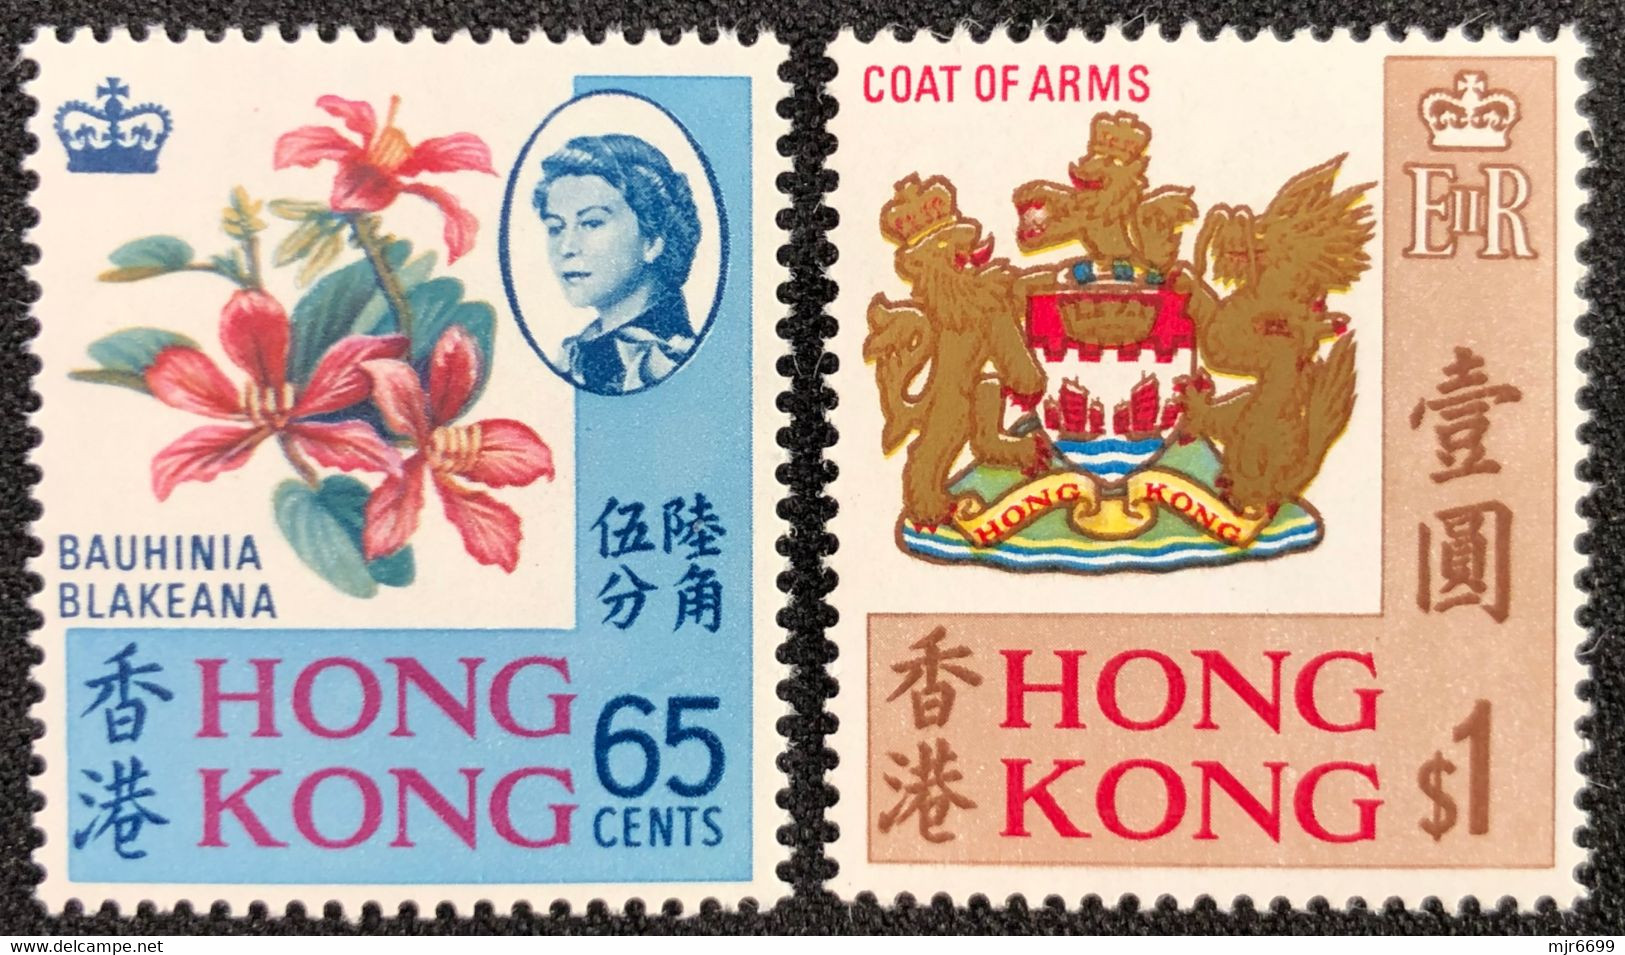 HONG KONG 1968 SET UM\MINT, NOT CHECKED FOR WATERMARK AND GUM - Ungebraucht